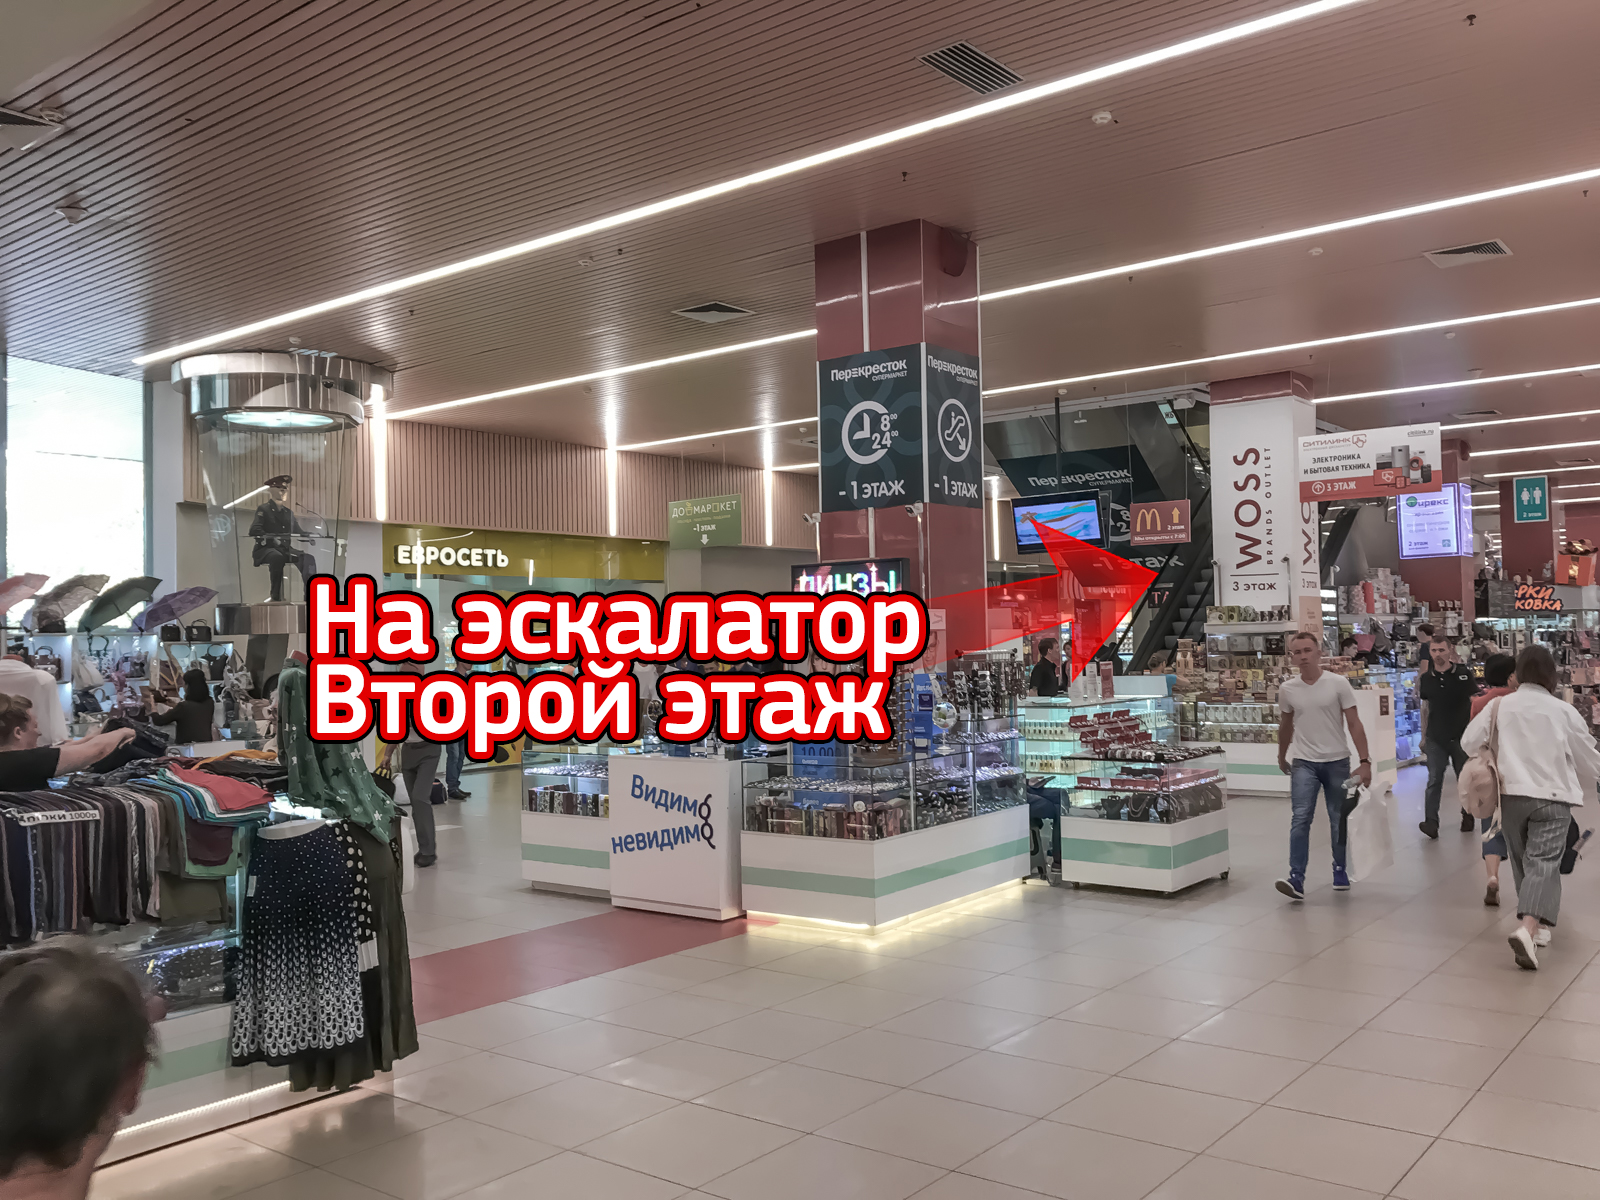 Woss Интернет Магазин Каталог Товаров Москва